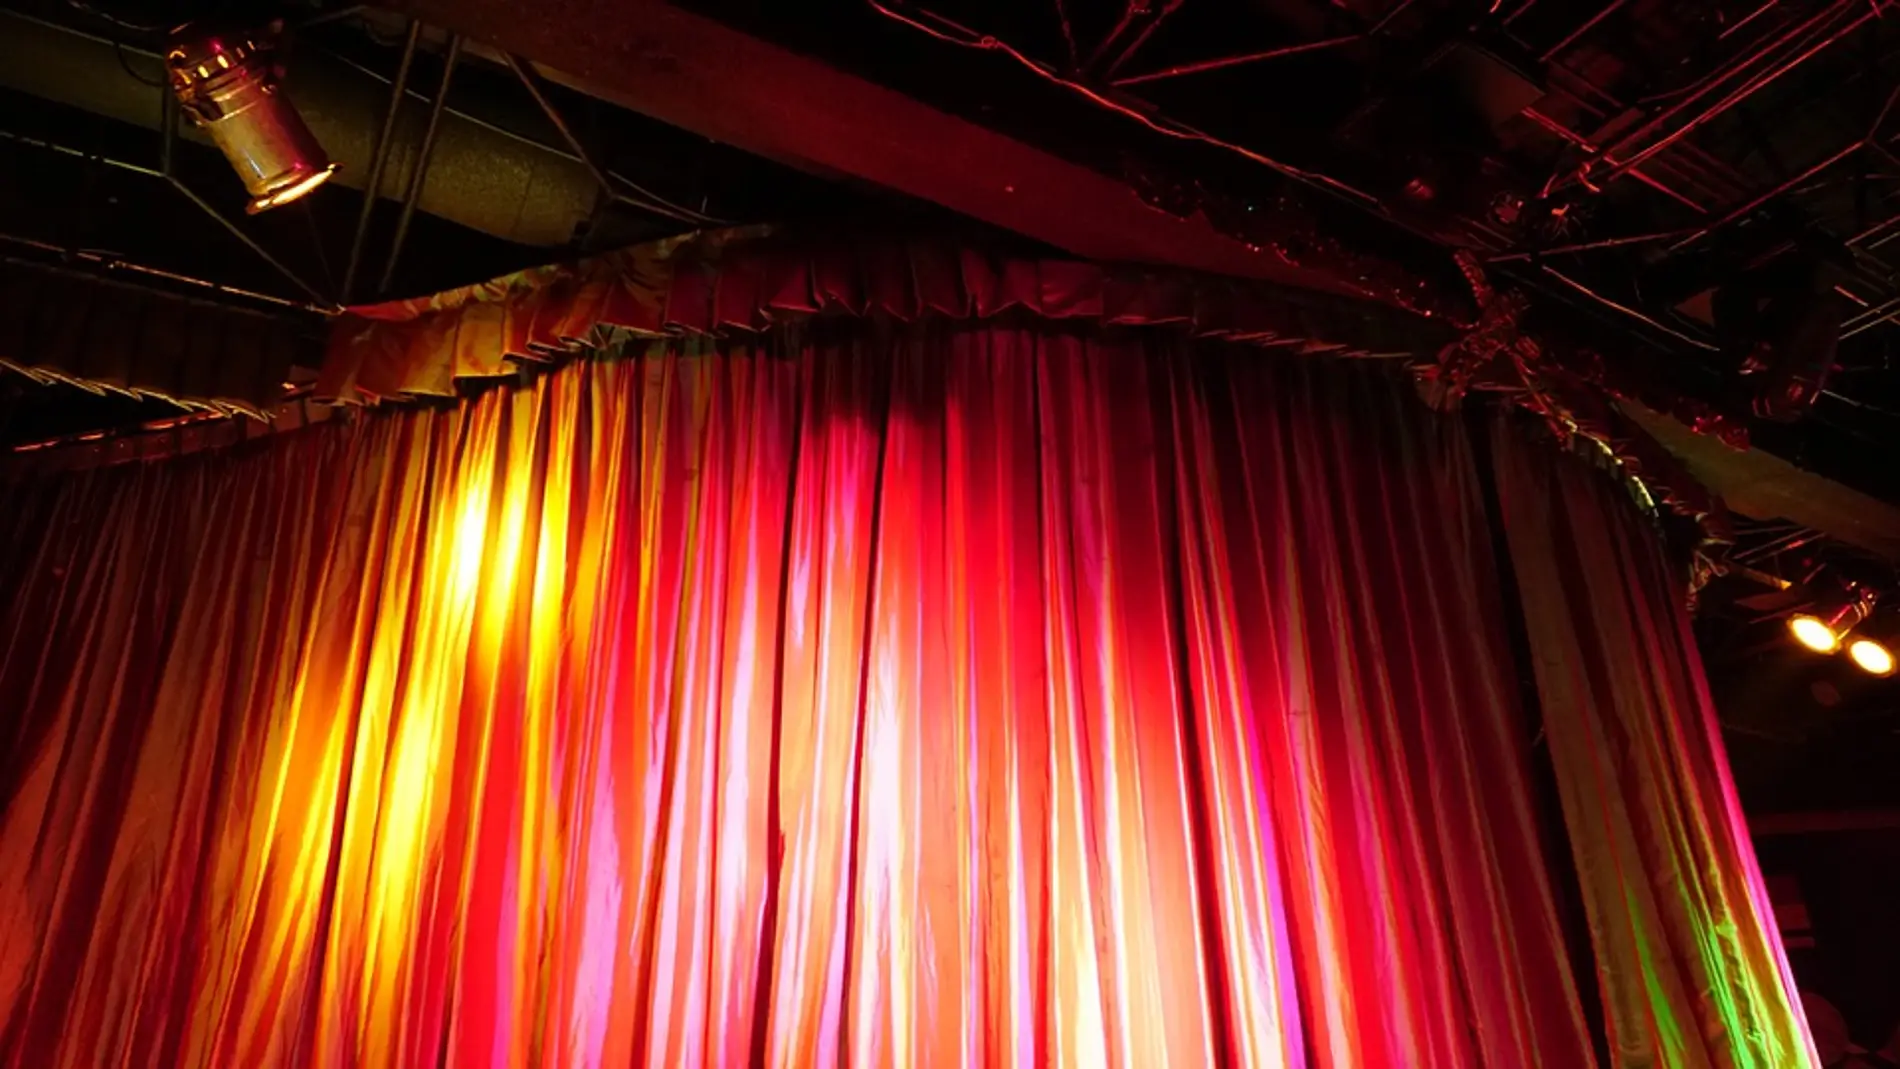 Imagen de un escenario de un musical o teatro